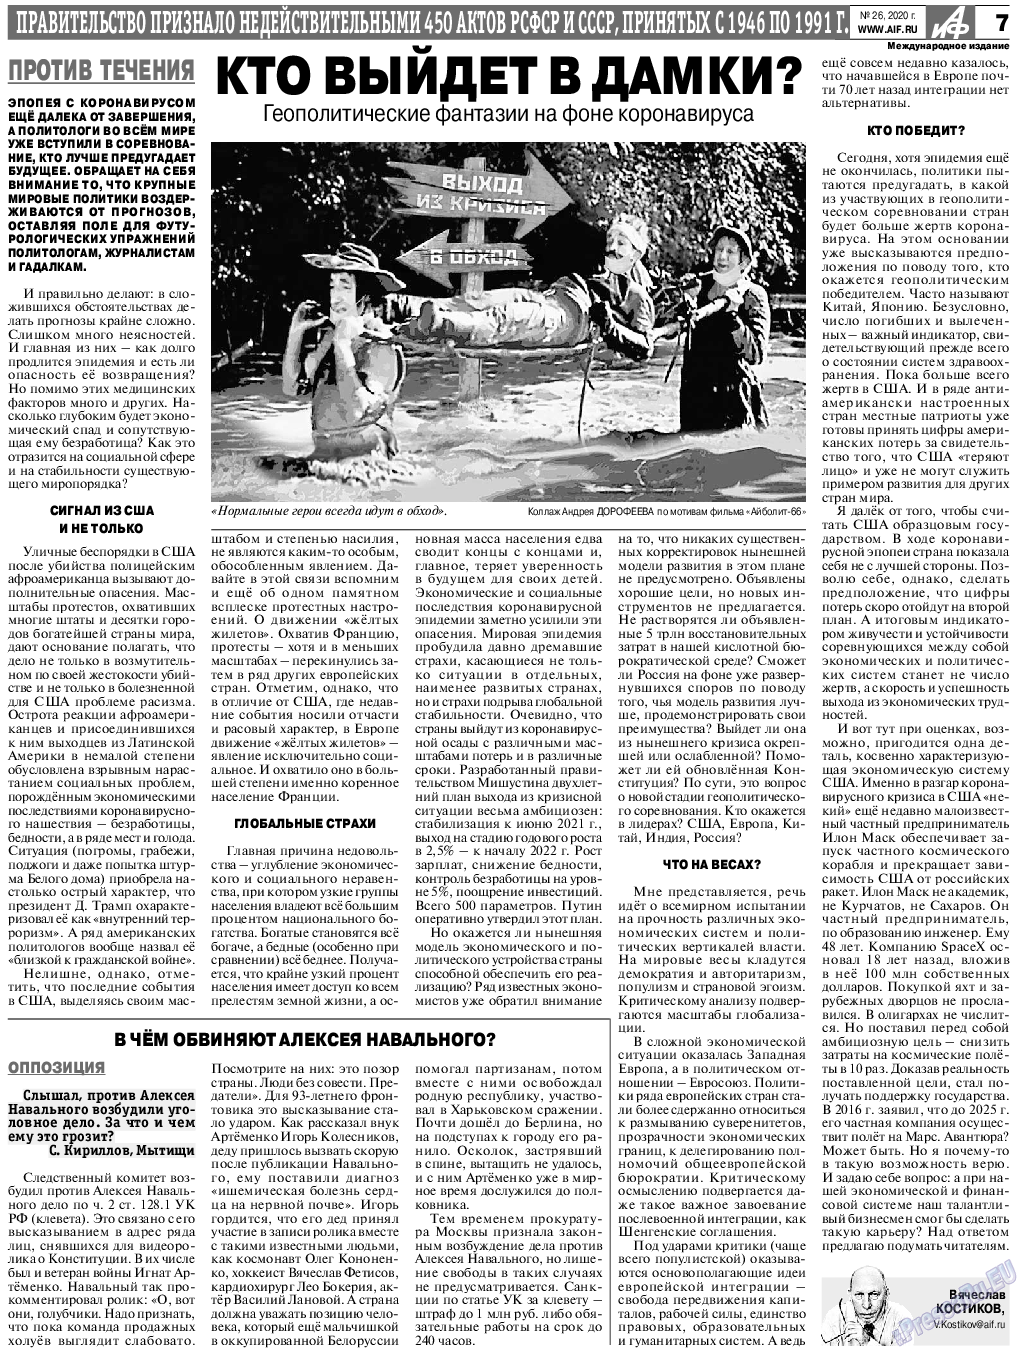 Аргументы и факты Европа, газета. 2020 №26 стр.7